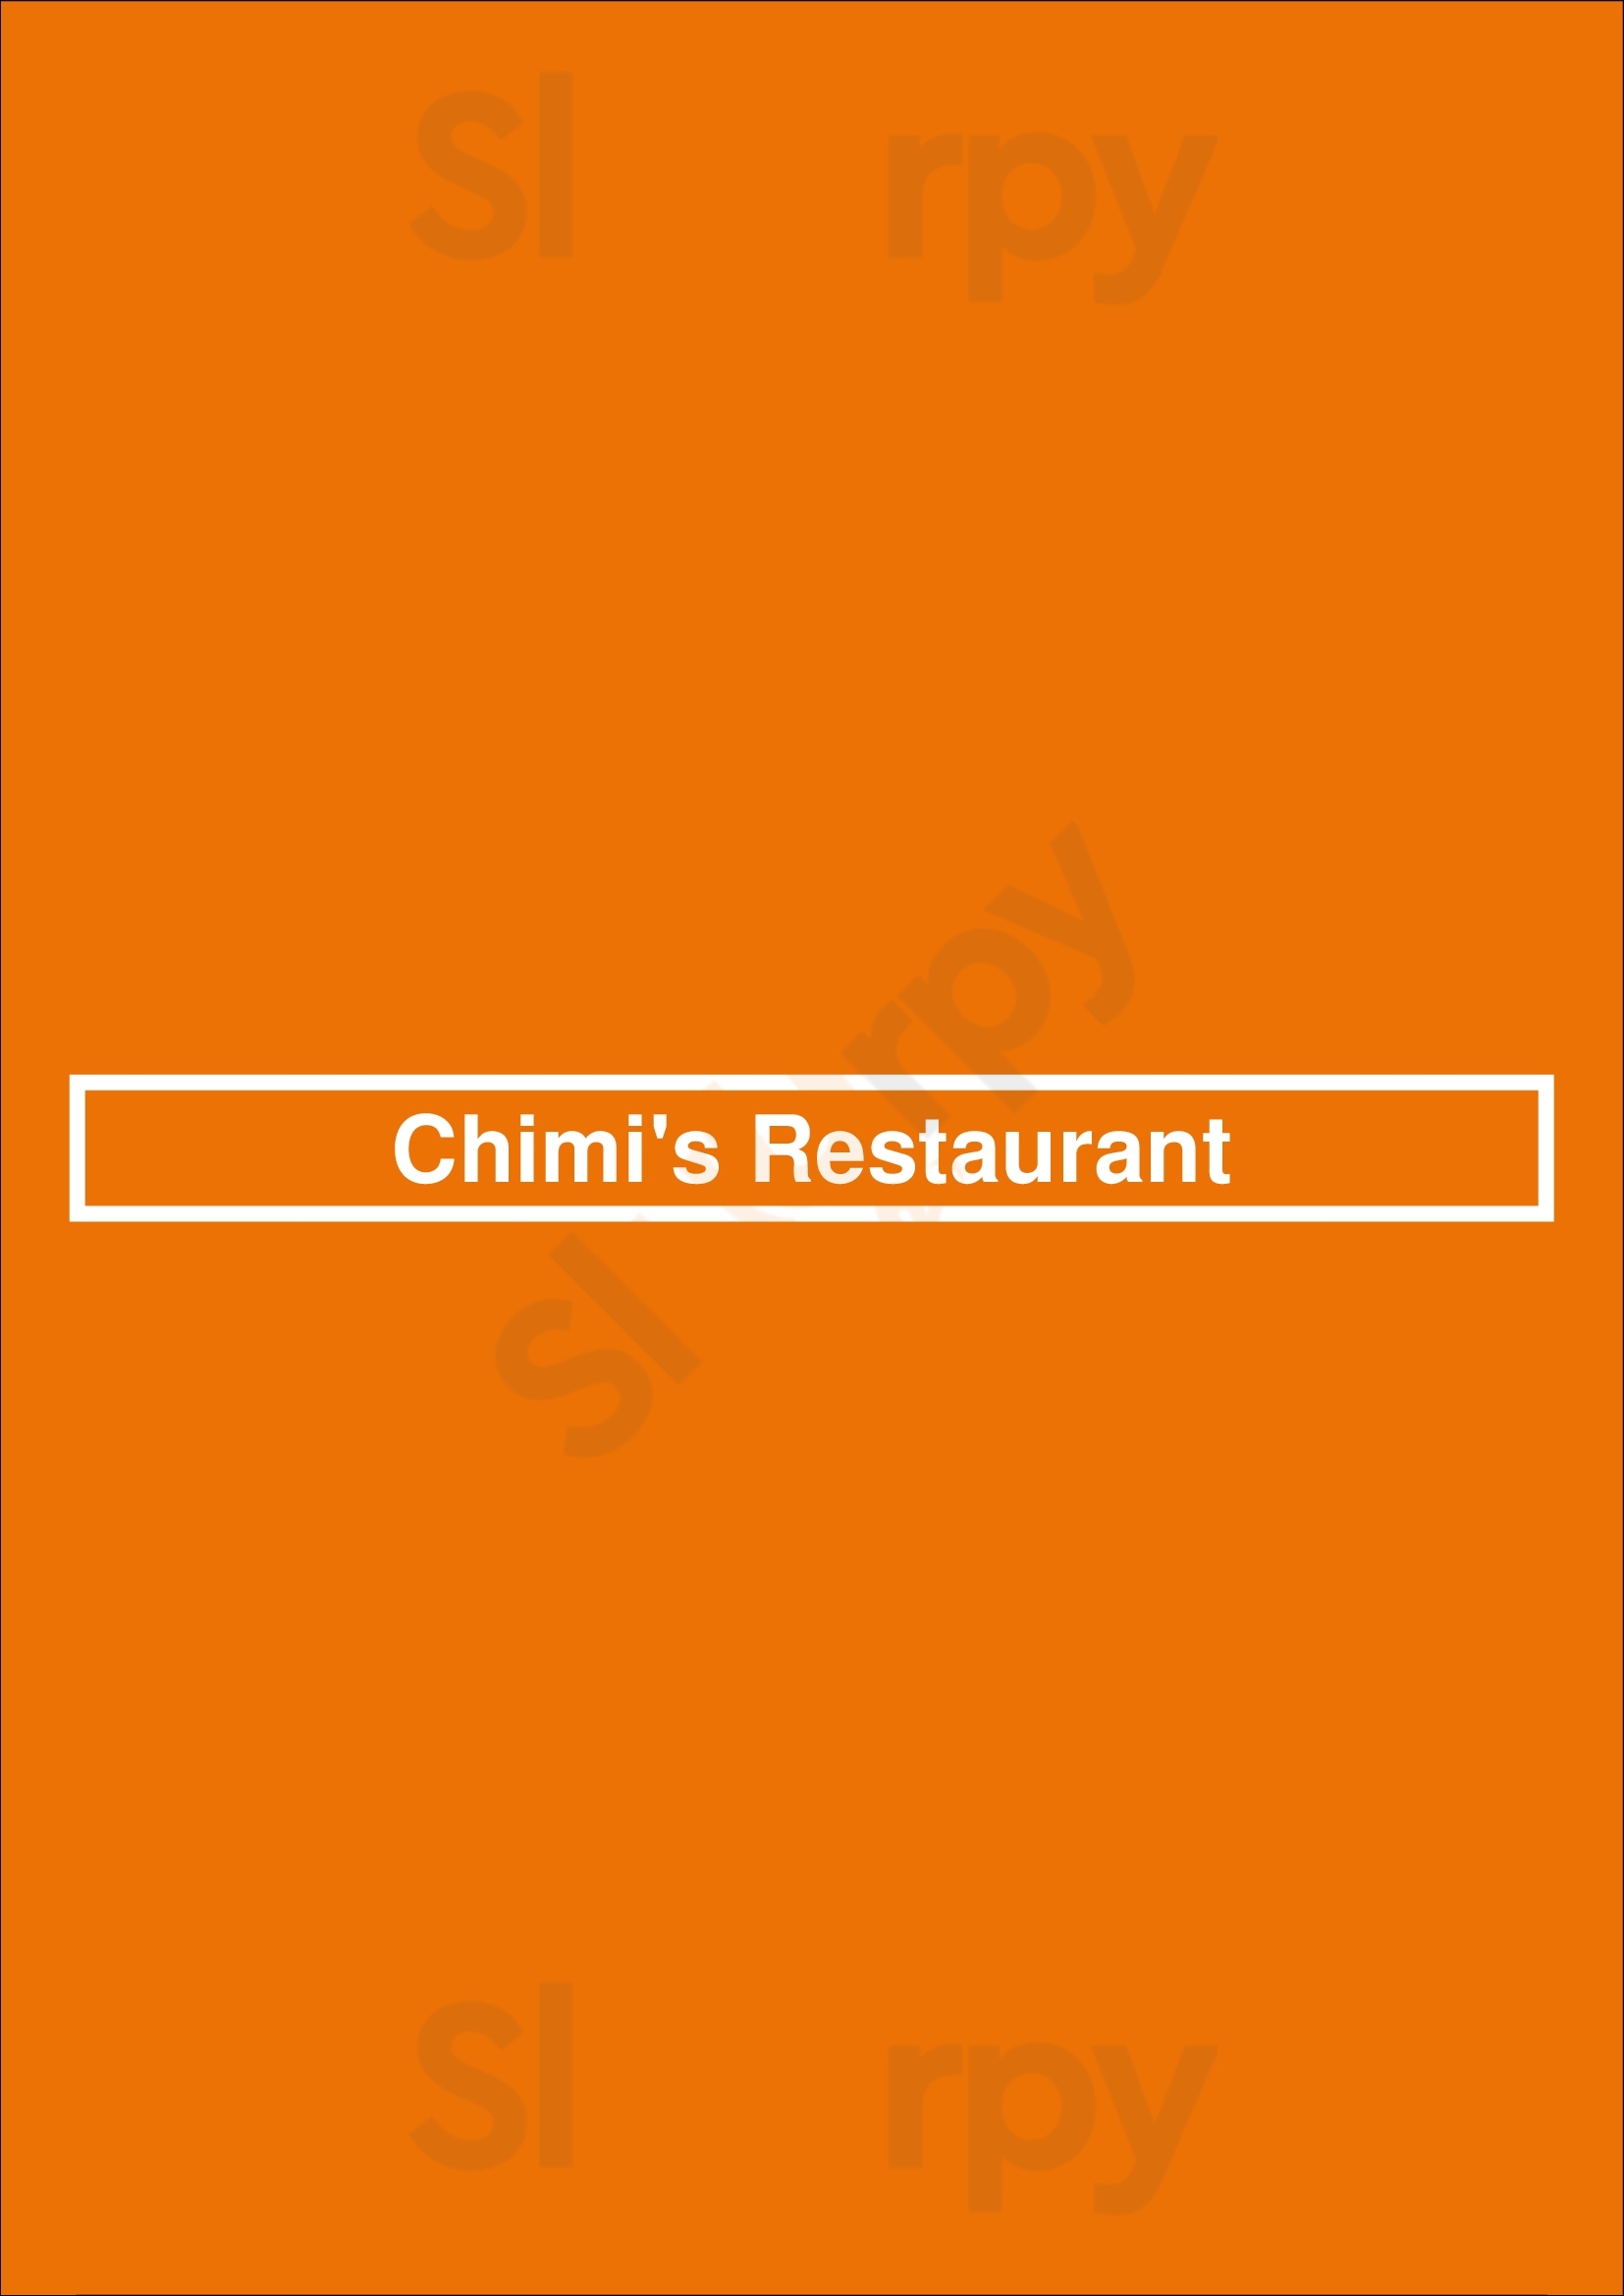 Chimi's Mexican Restaurant Tulsa Menu - 1